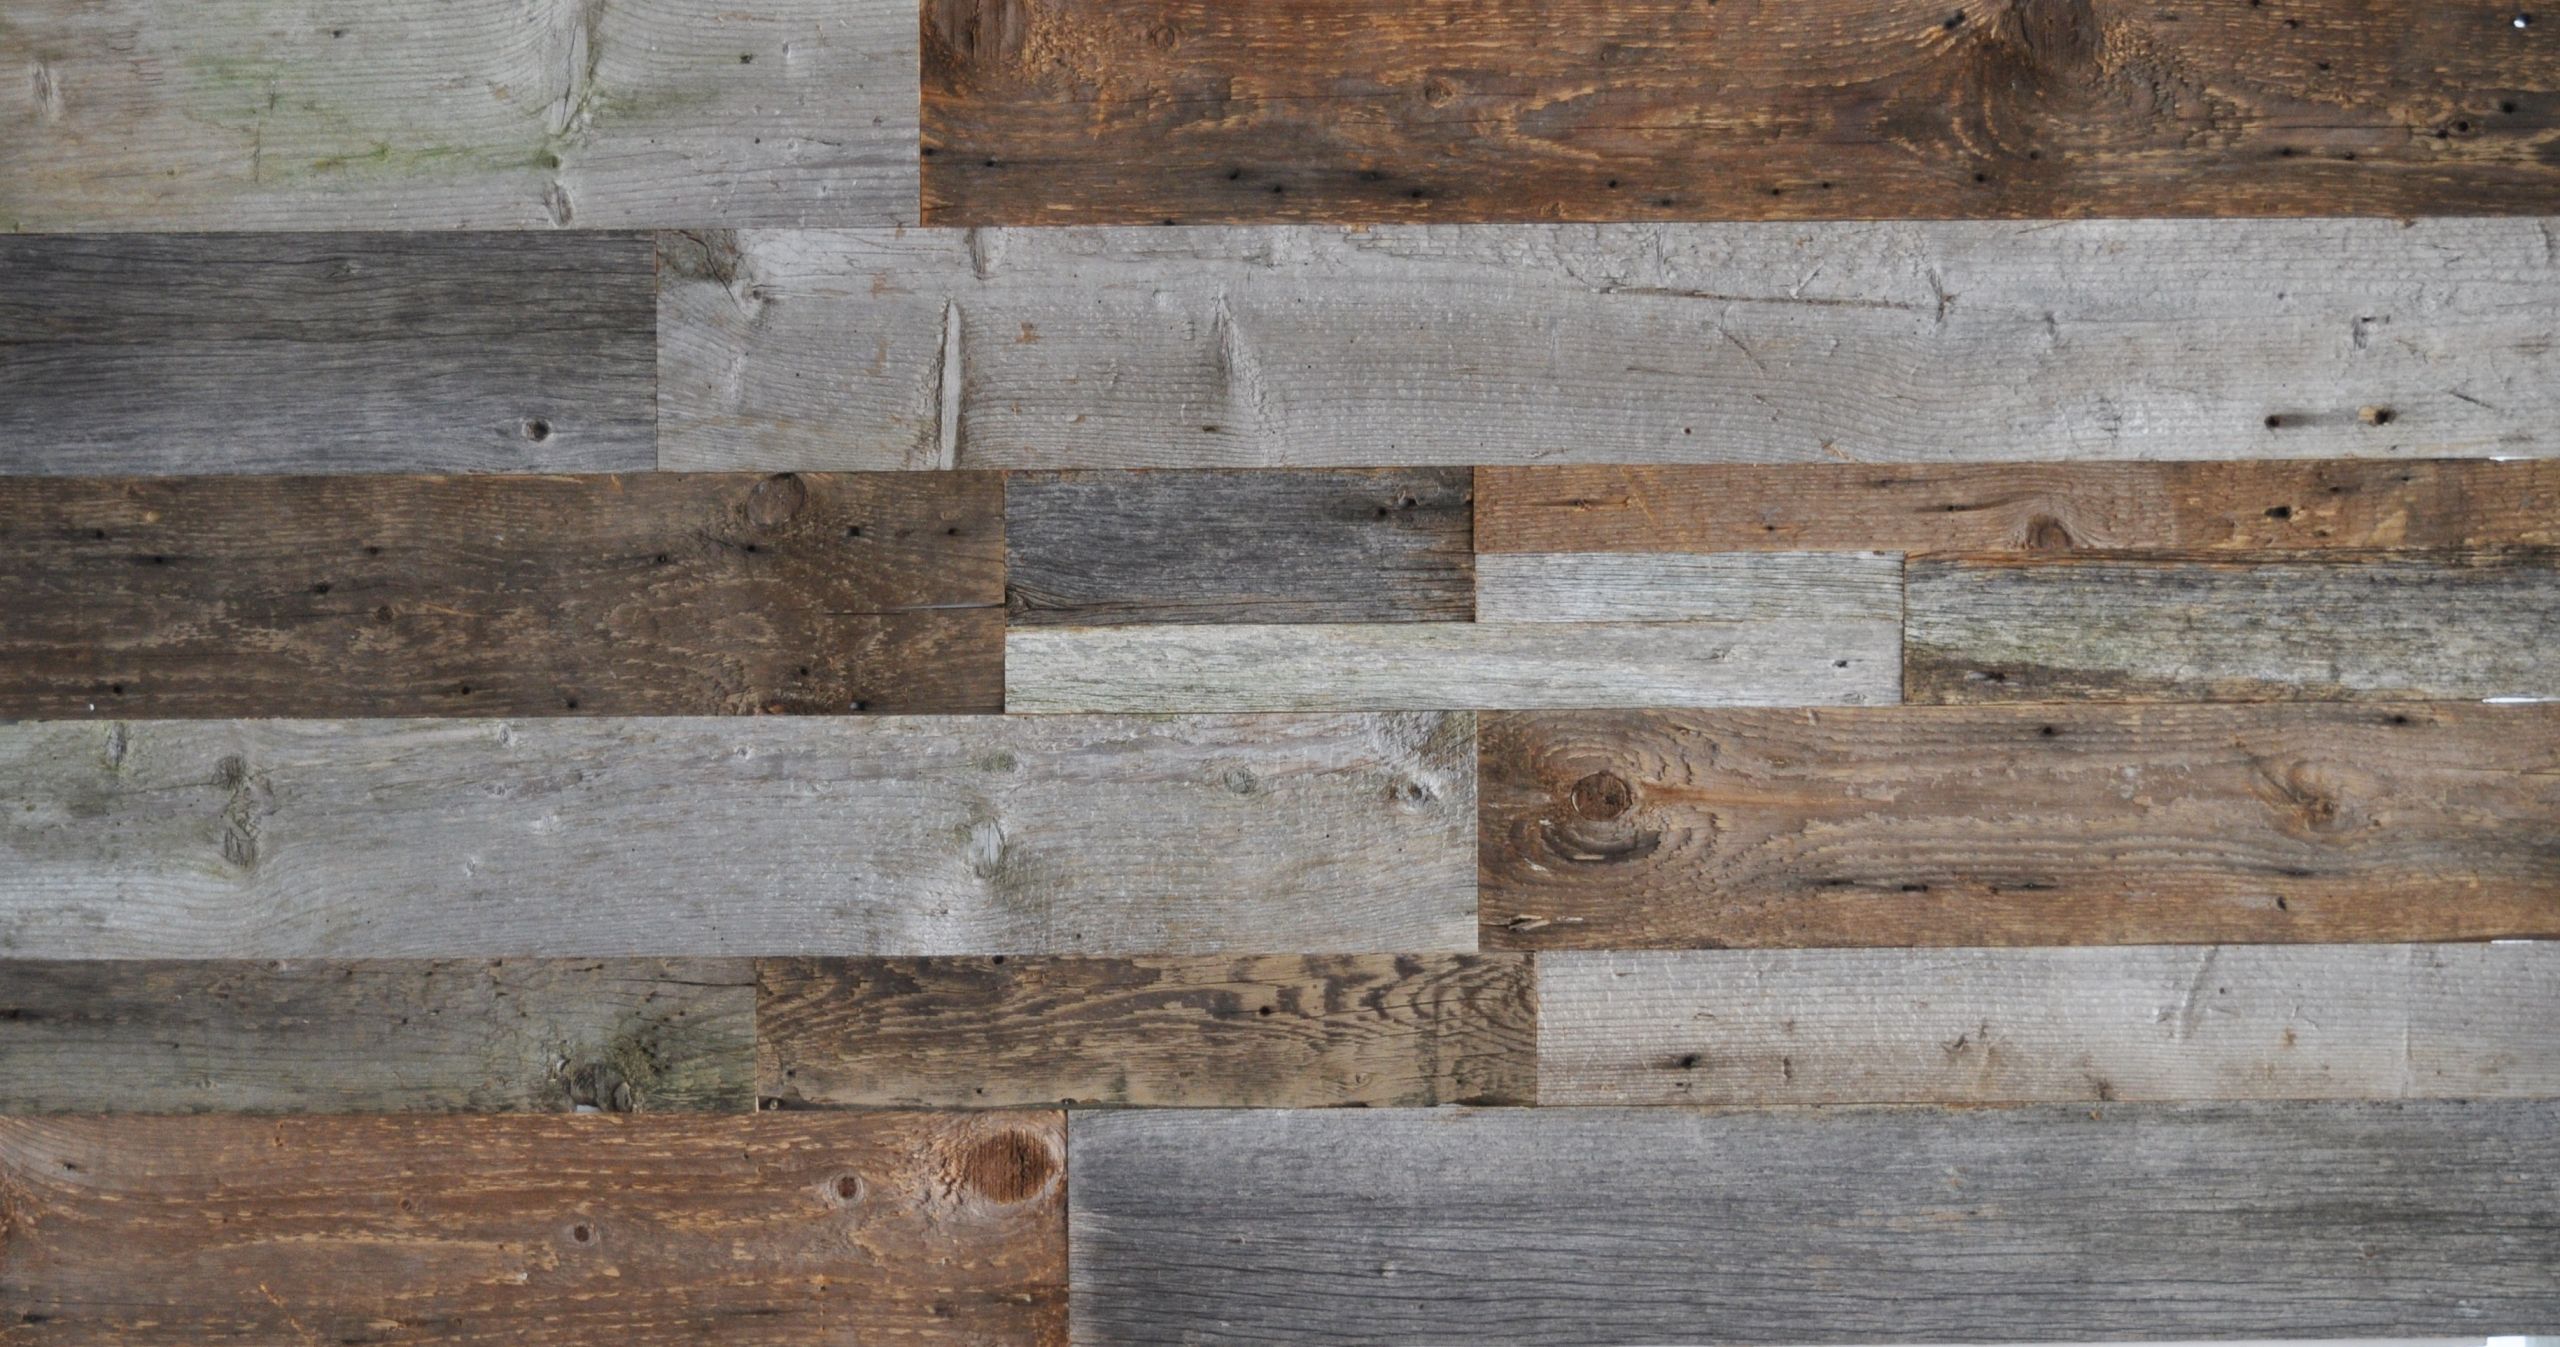 Barnwood Wall DIY
 DIY Reclaimed Wood Accent Wall Grey and Natural Brown